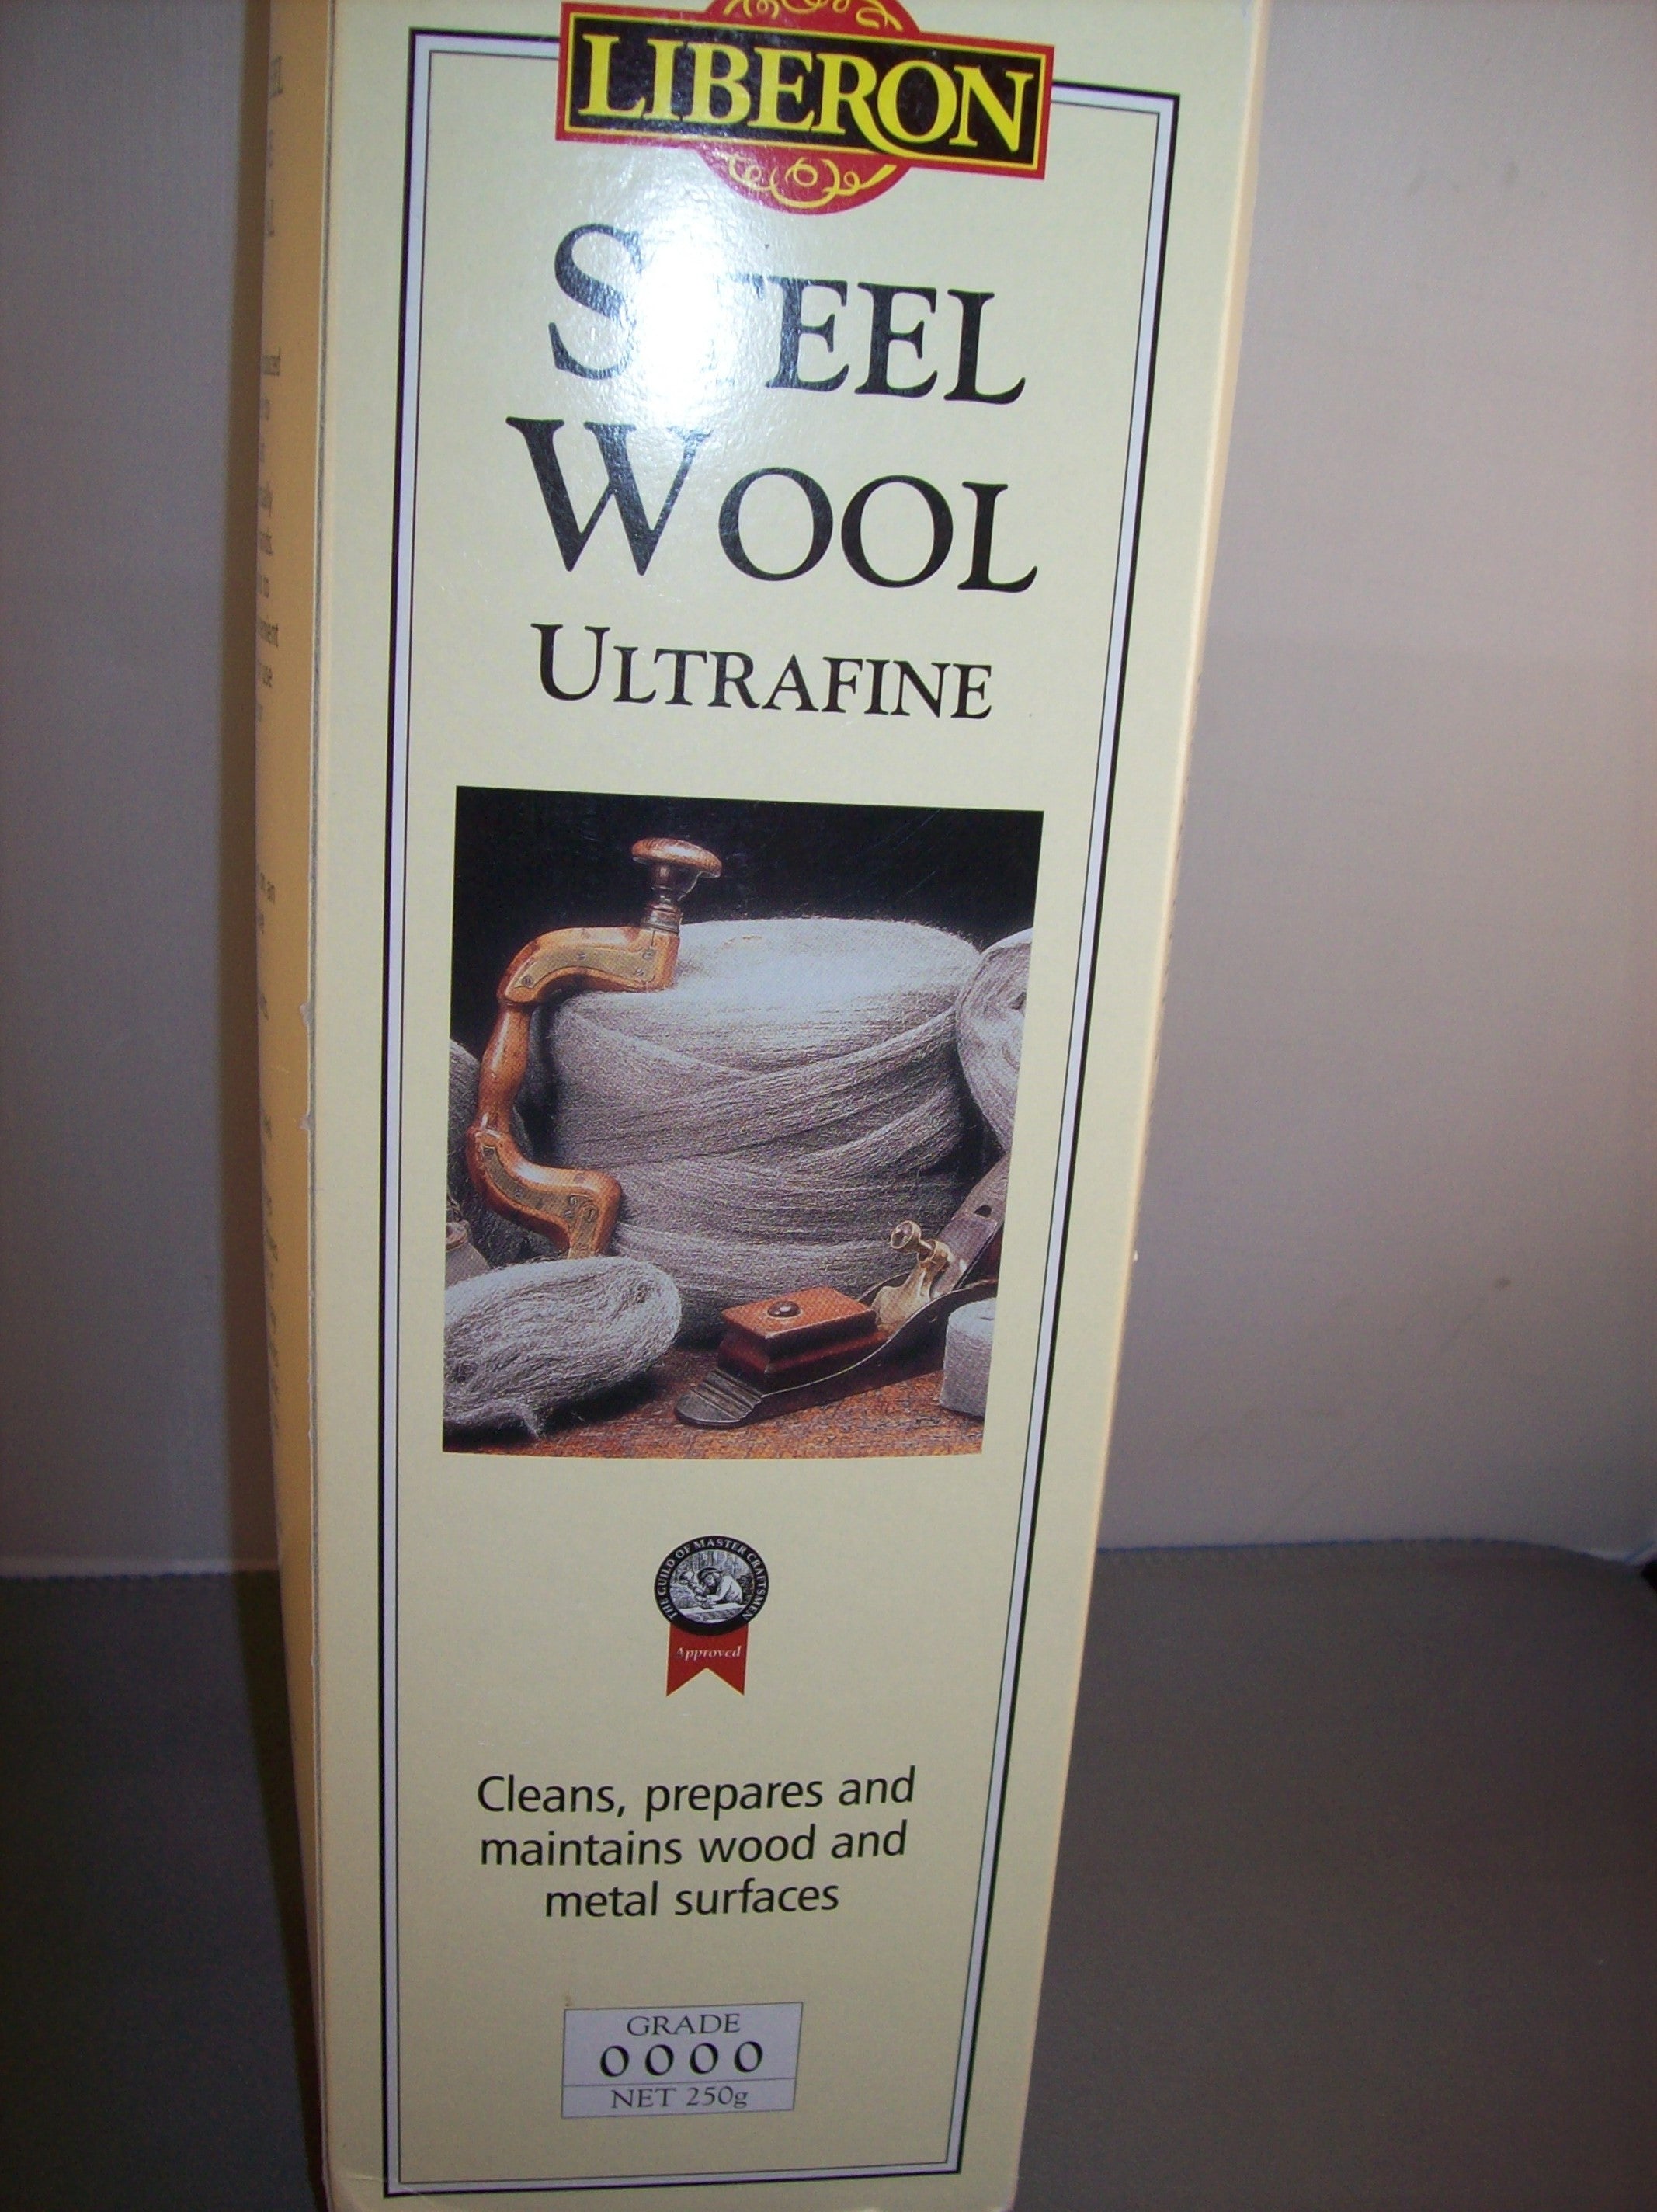 Liberon 0000 Steel wool, 250g size